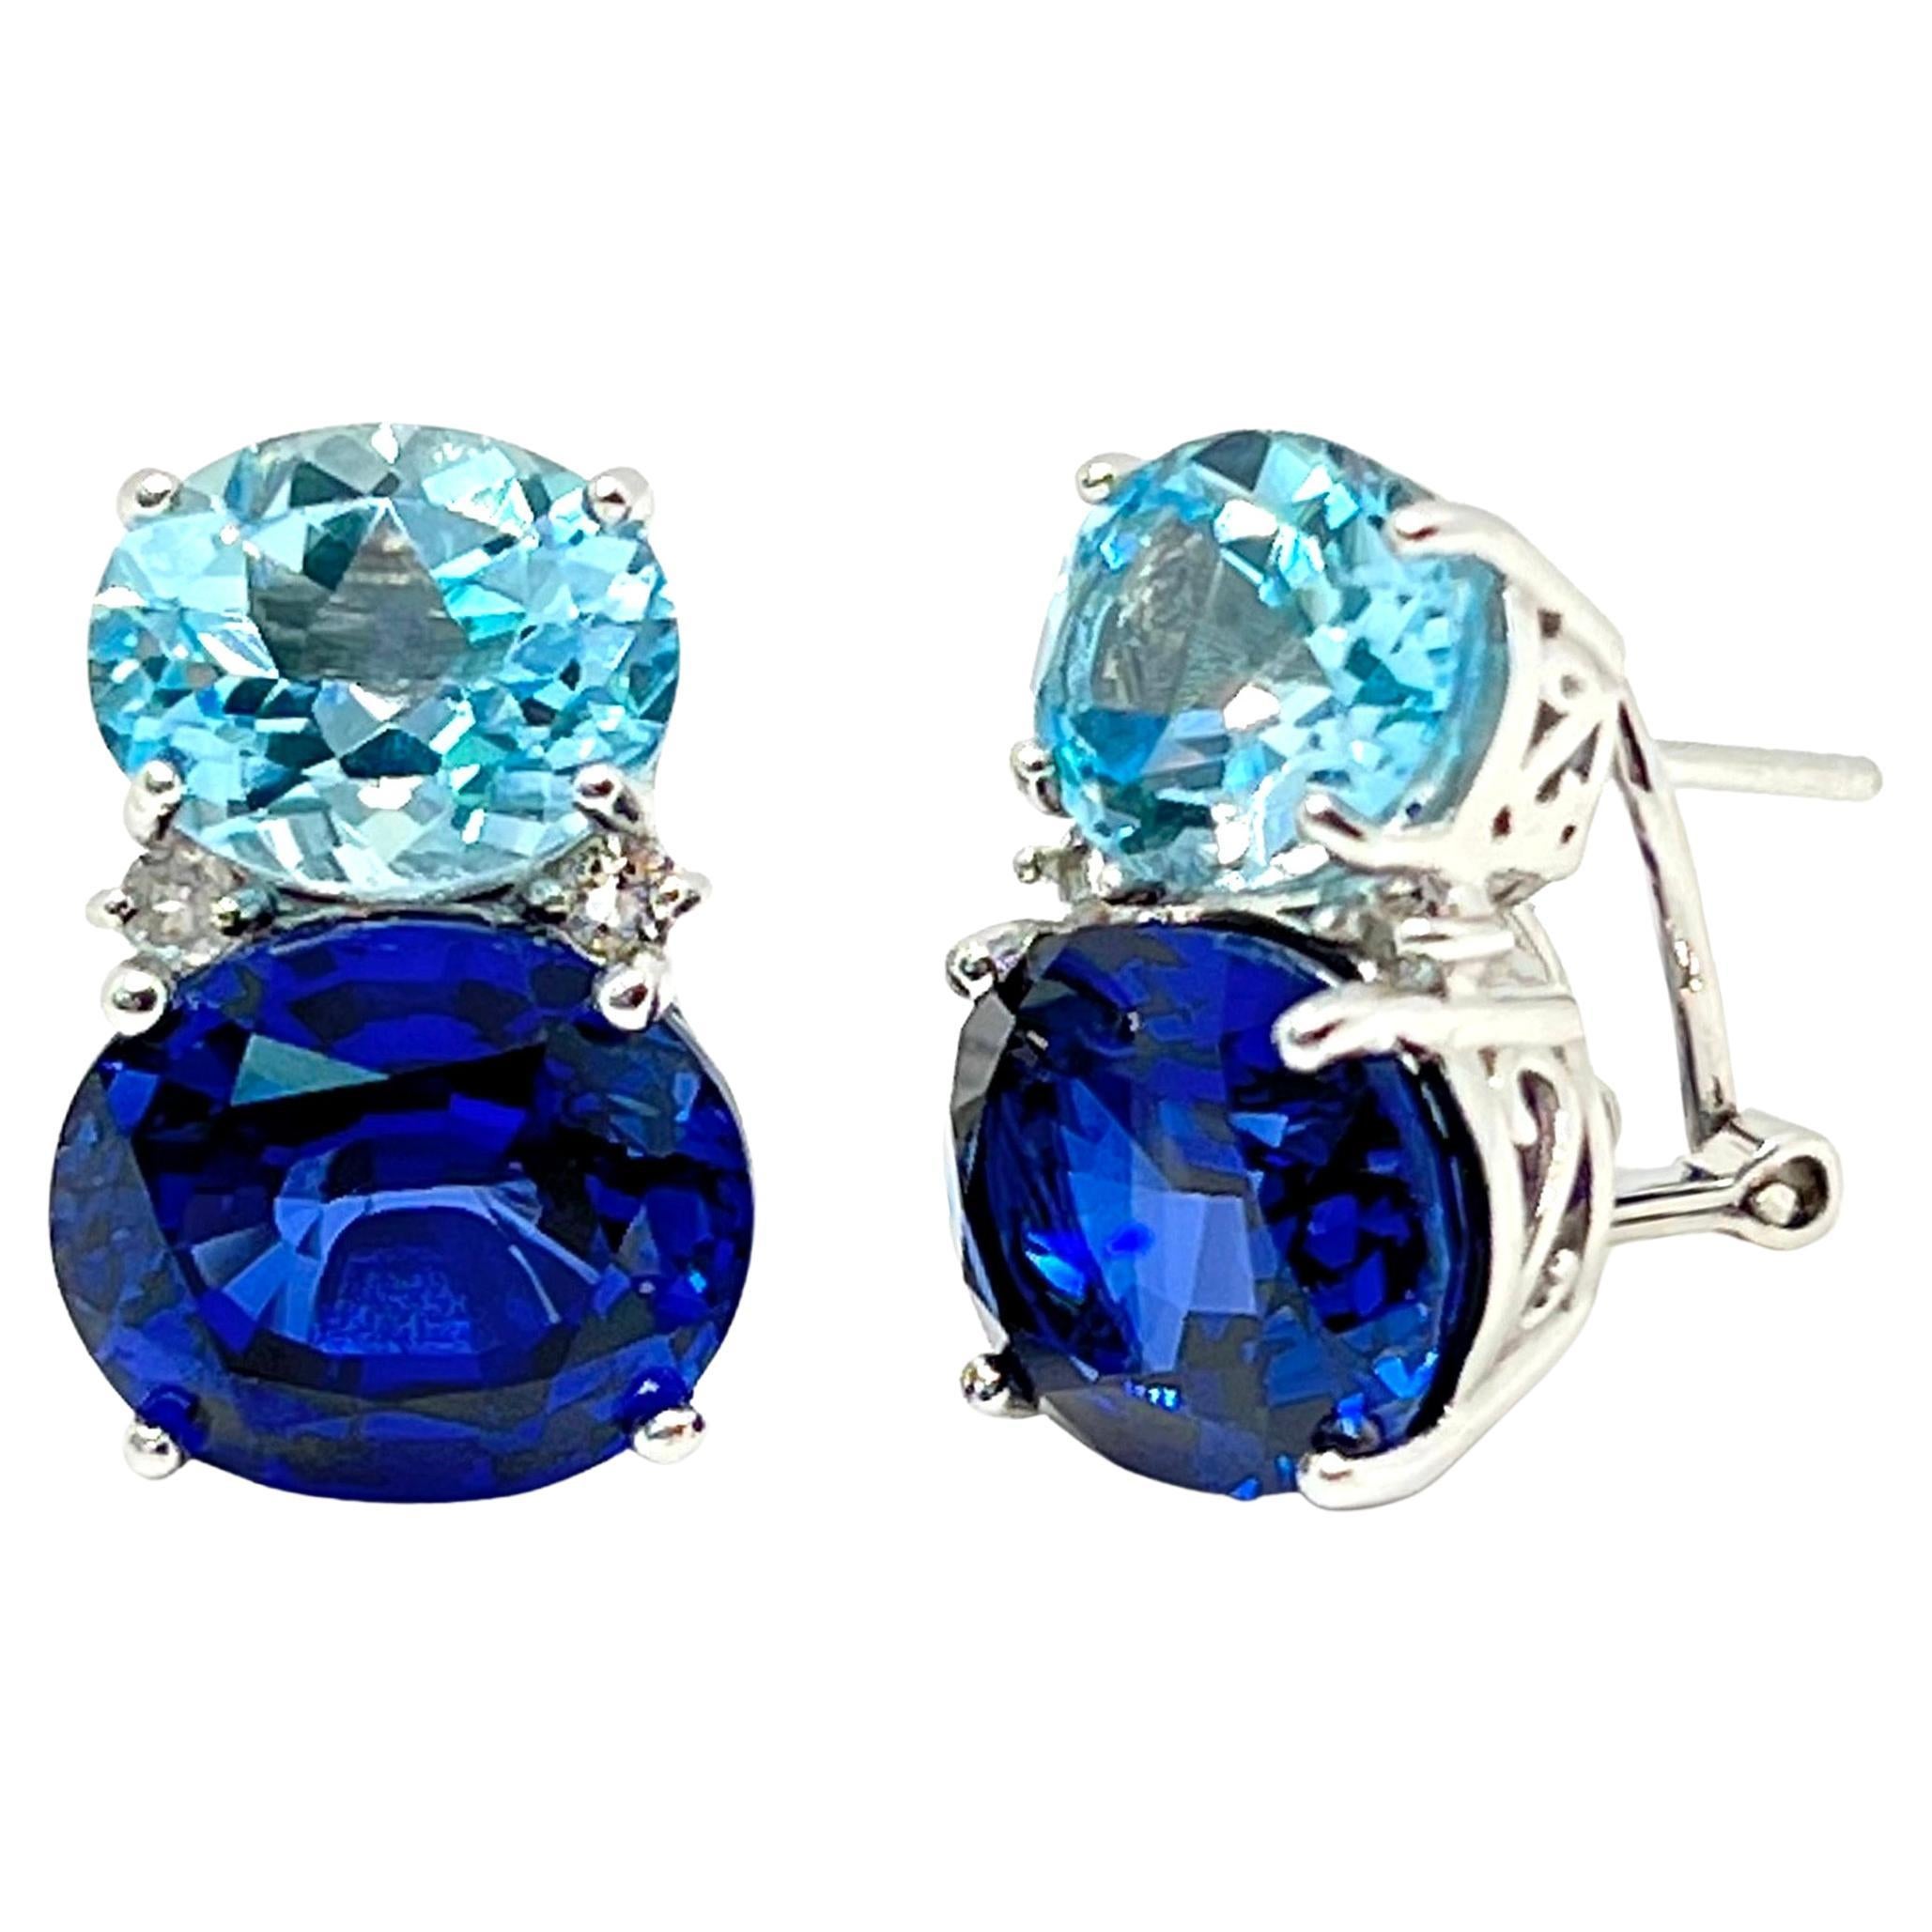 Atemberaubende doppelte ovale blaue Topas- und Saphir-Ohrringe im Angebot